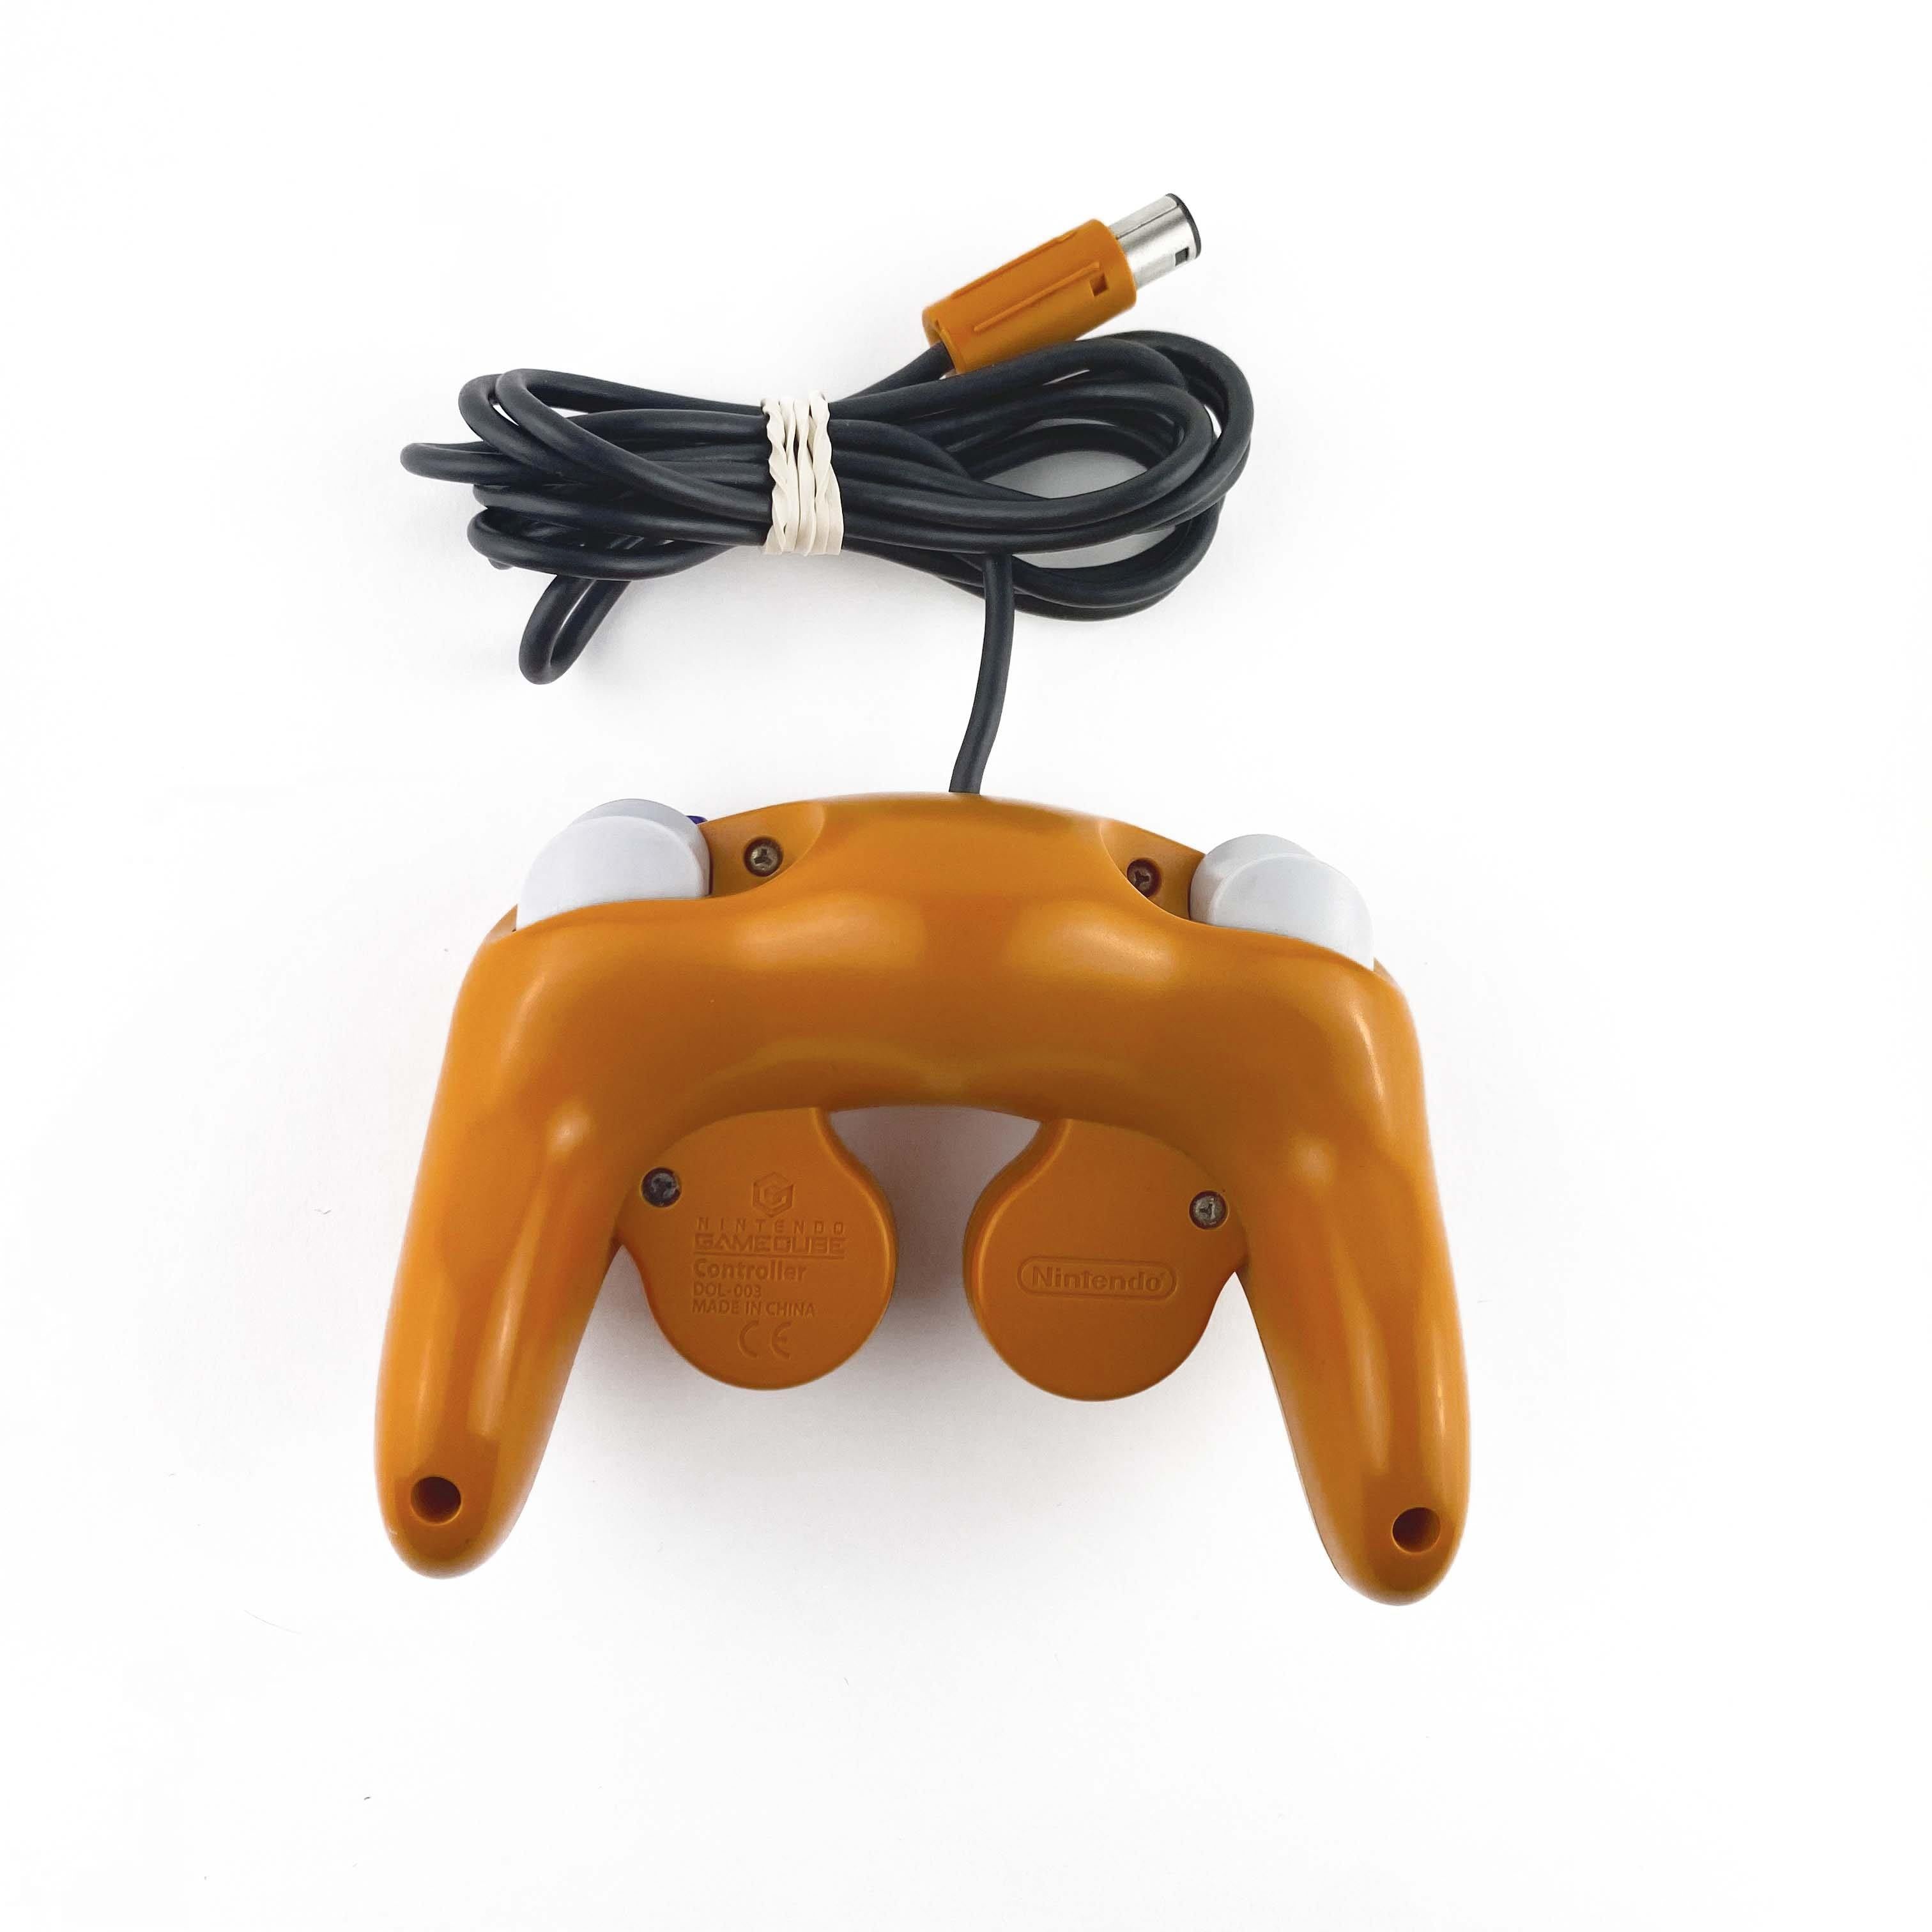 Nintendo GameCube Spice Orange Controller (DOL-003)